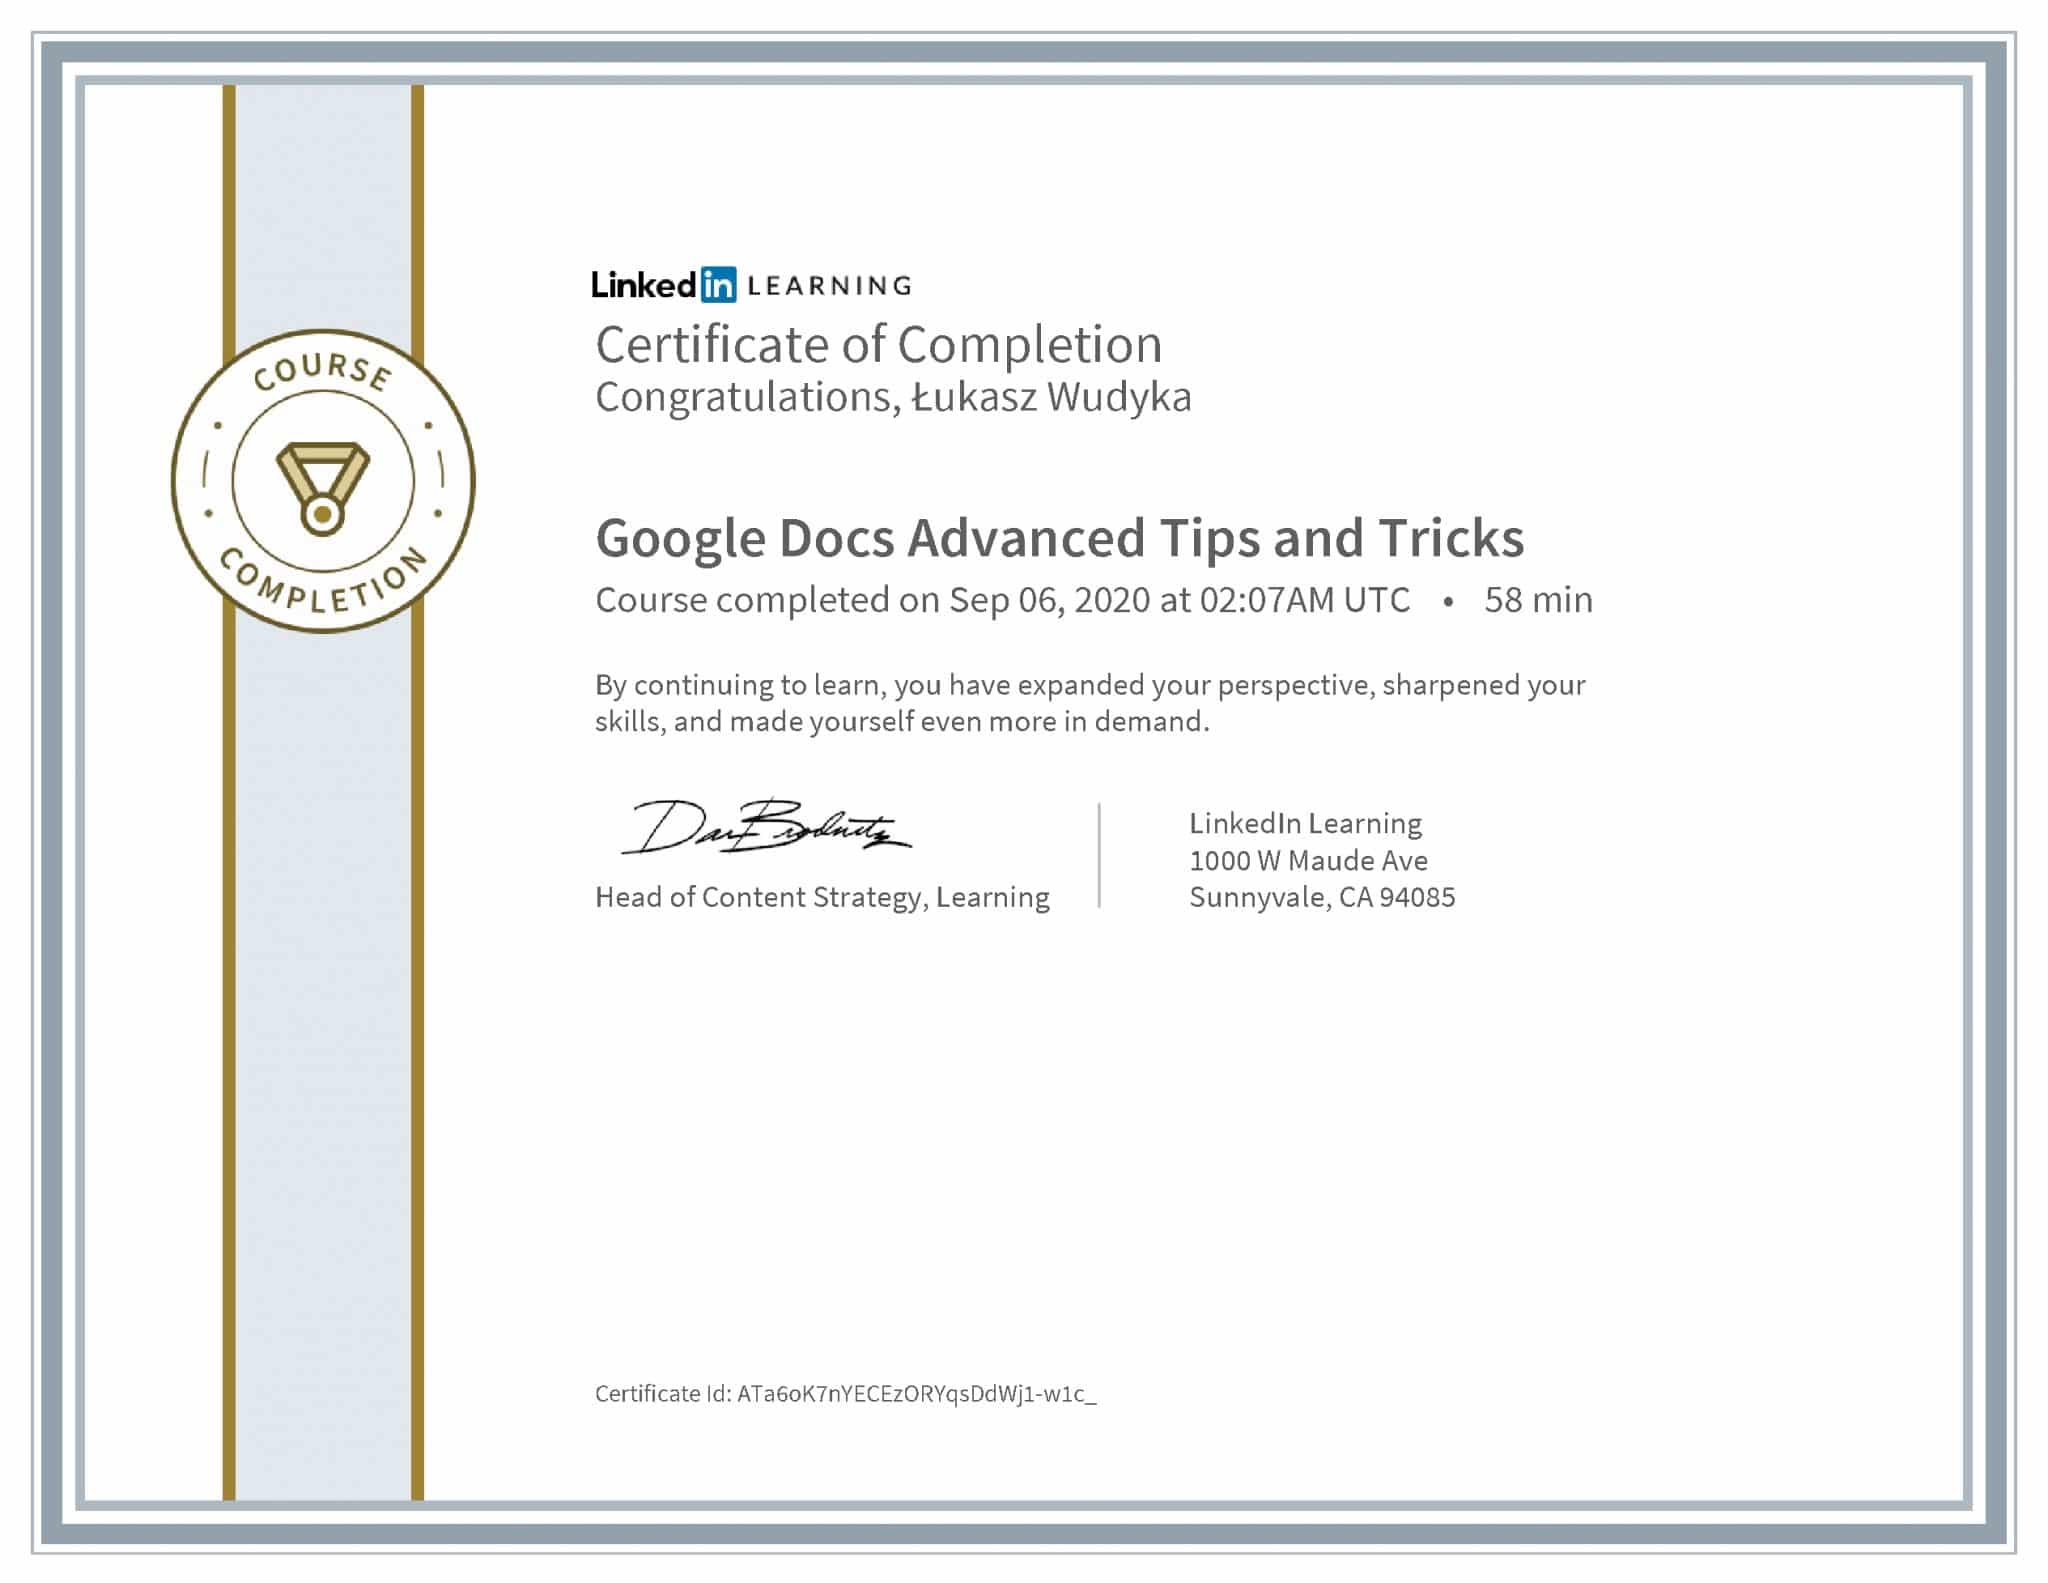 Łukasz Wudyka certyfikat LinkedIn Google Docs Advanced Tips and Tricks